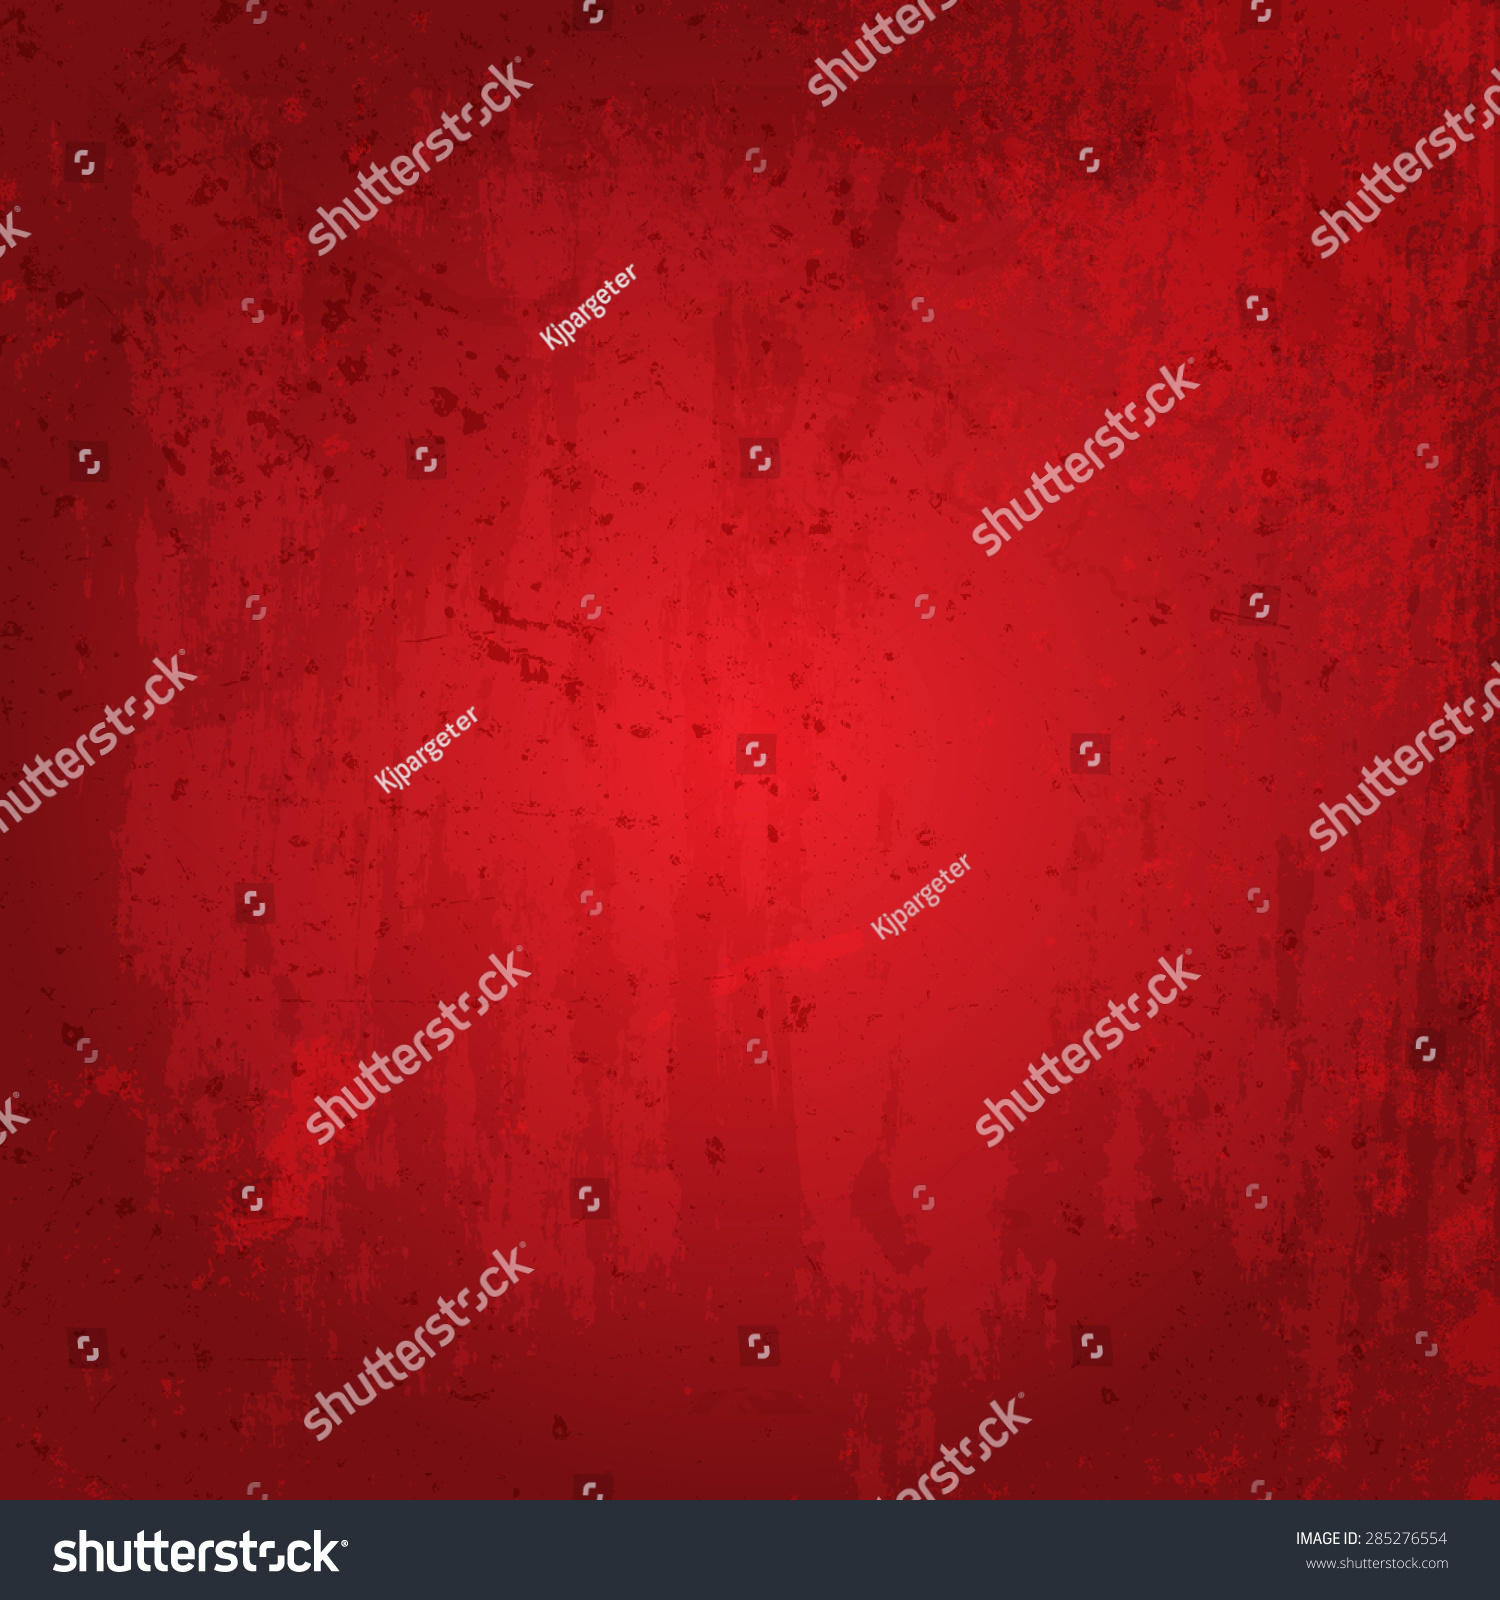 Detailed red grunge background #285276554